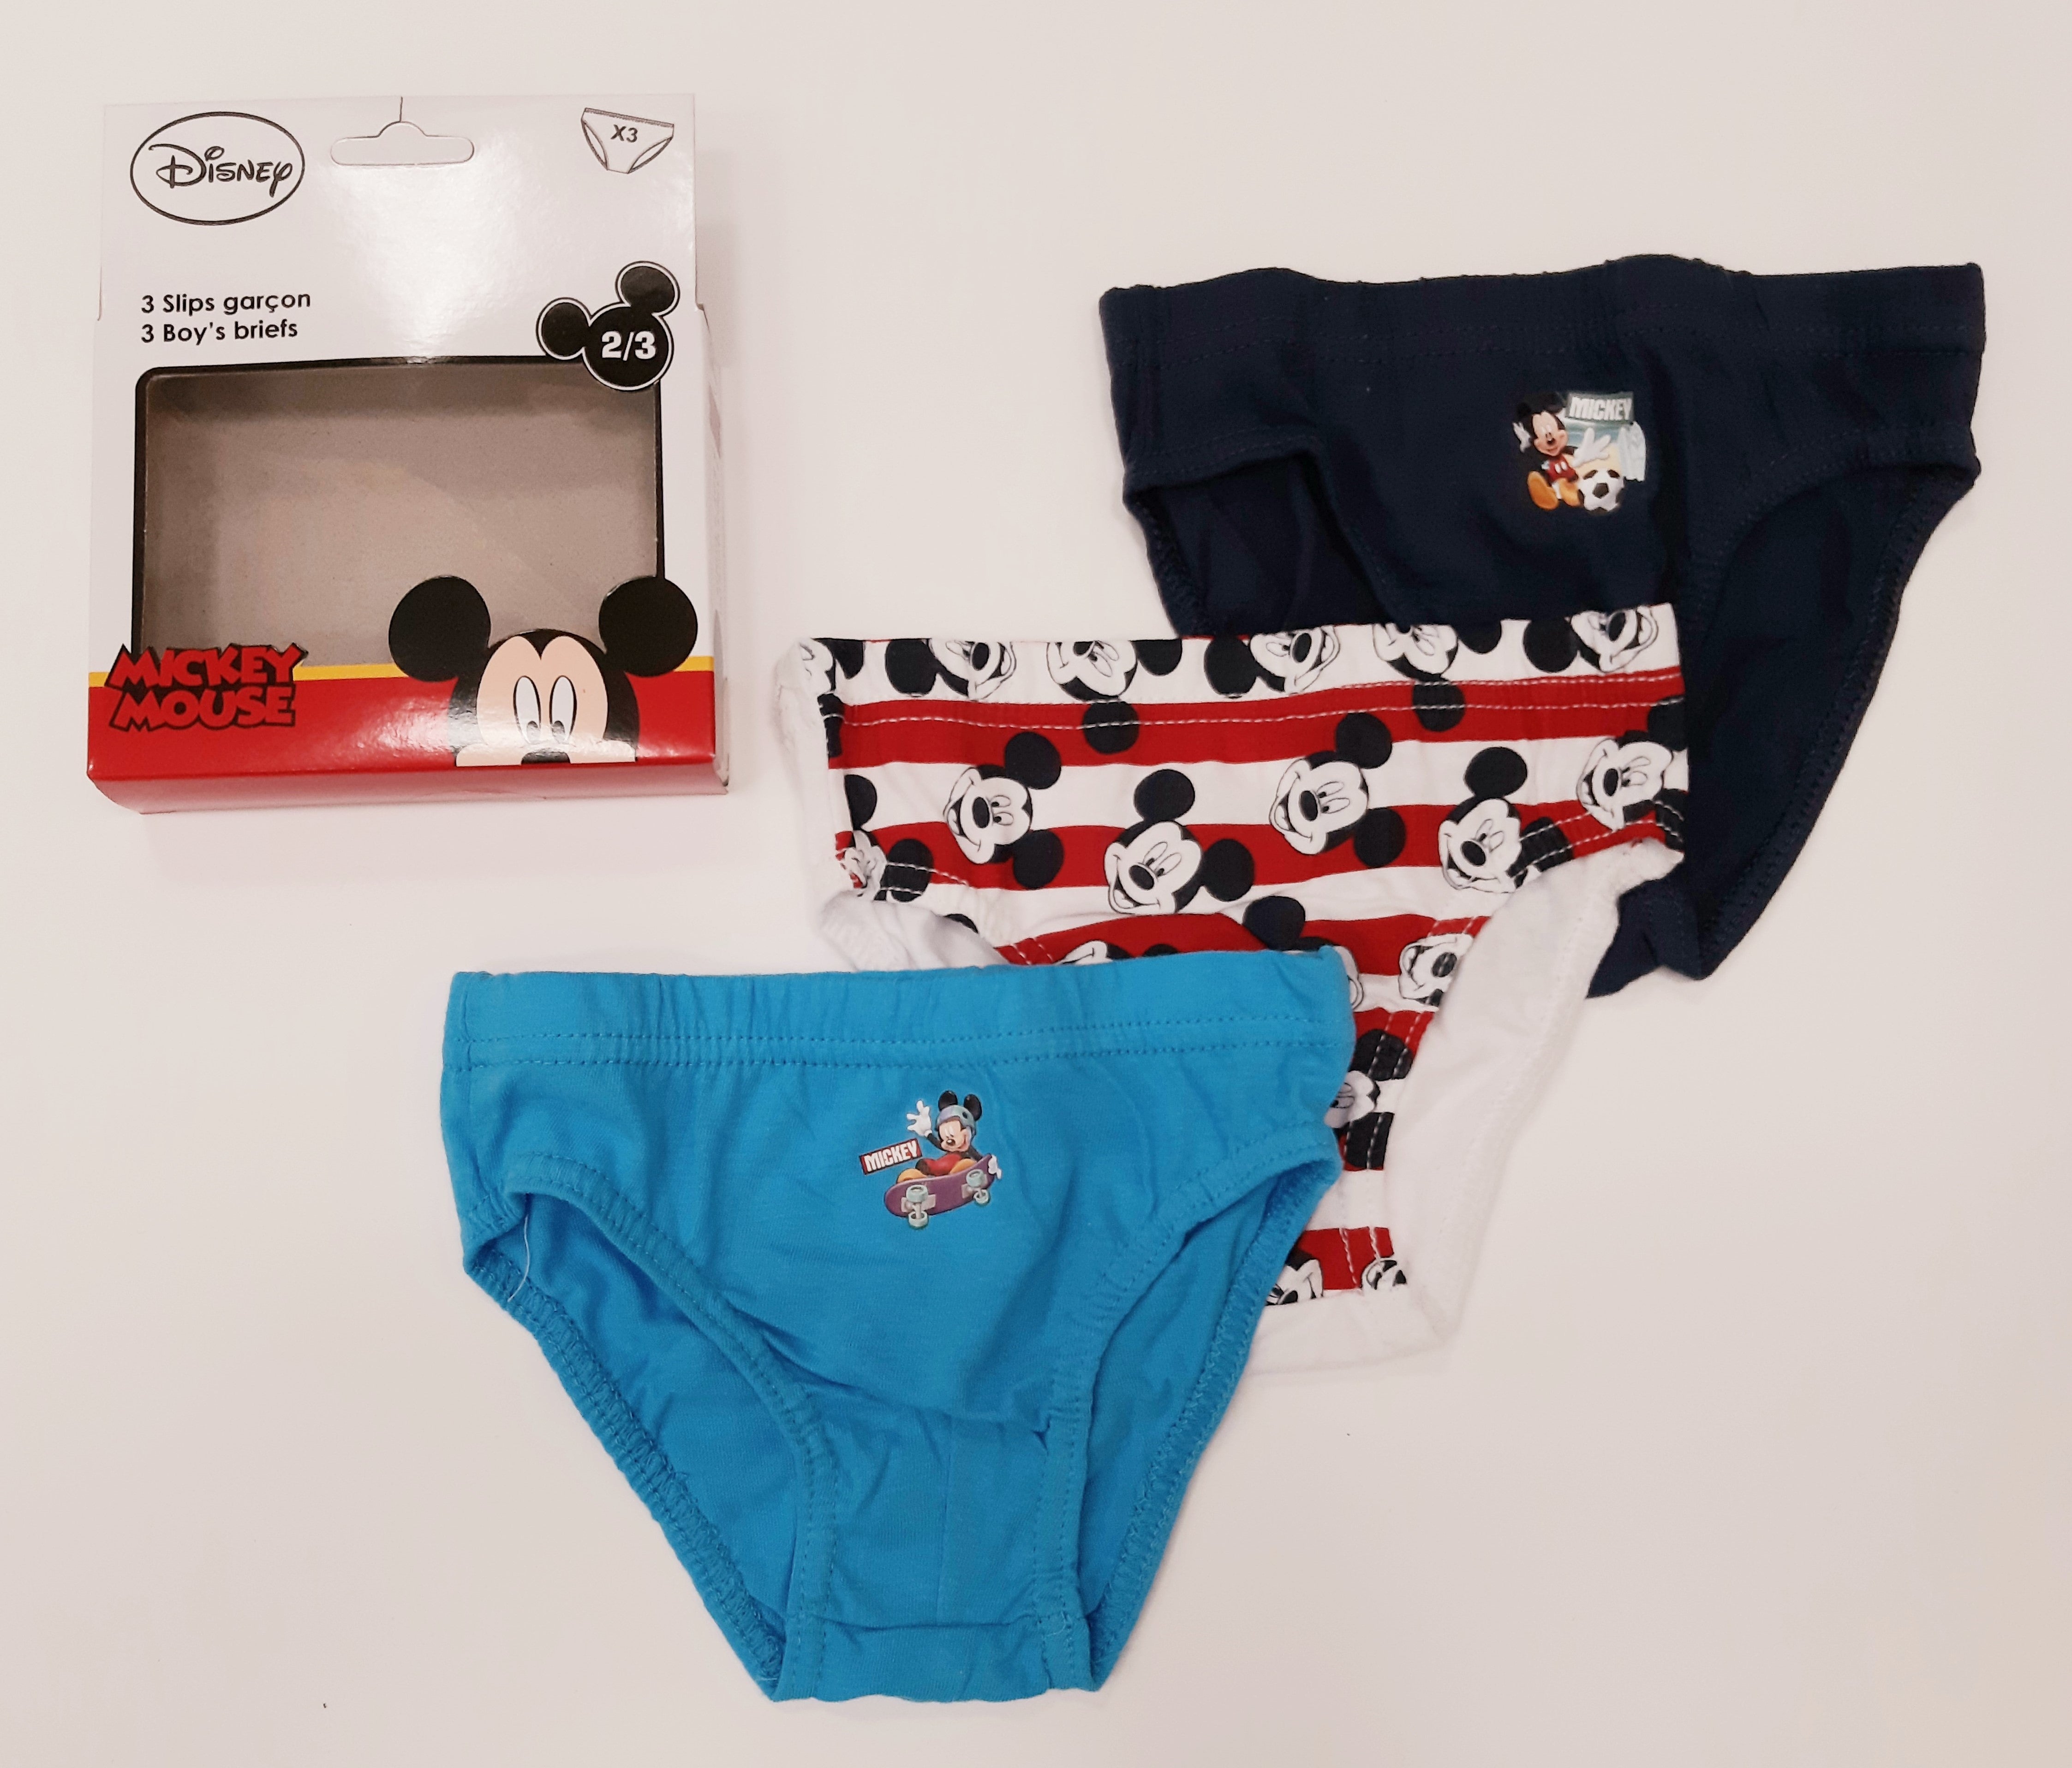  Boys' Underwear - Mickey Mouse / Boys' Underwear